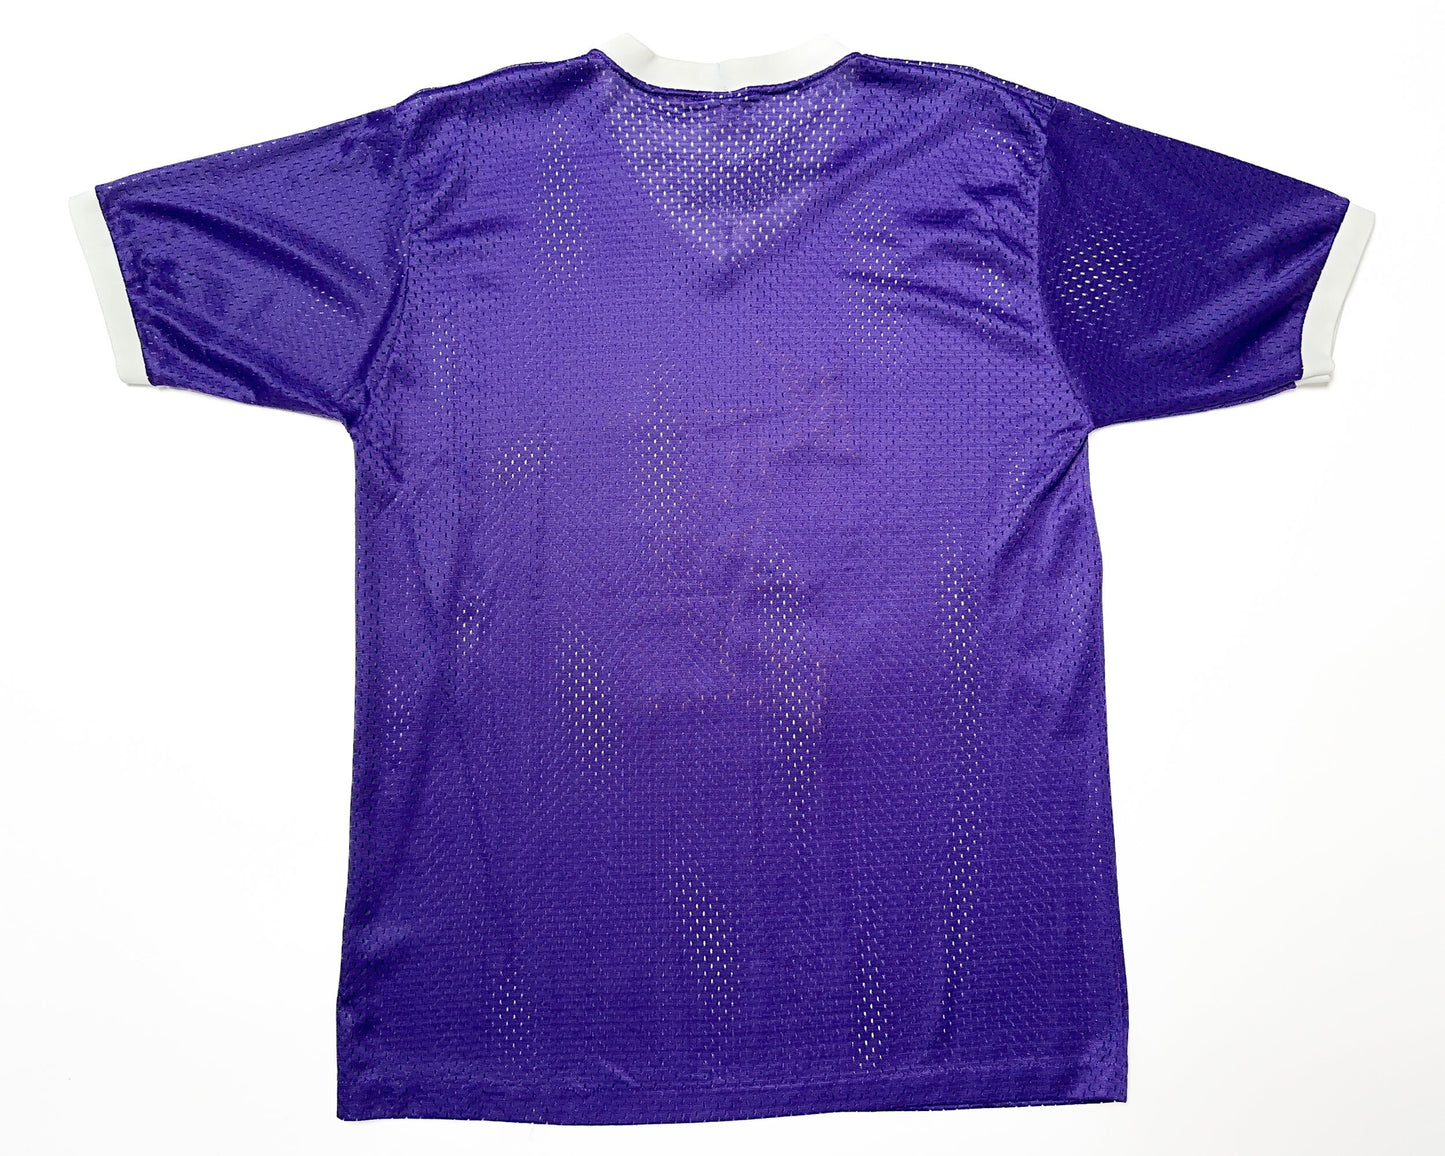 Medium 90s Minnesota Vikings NFL Jersey Shirt | Vintage Purple Mesh Football Athletic V Neck Ringer Tee